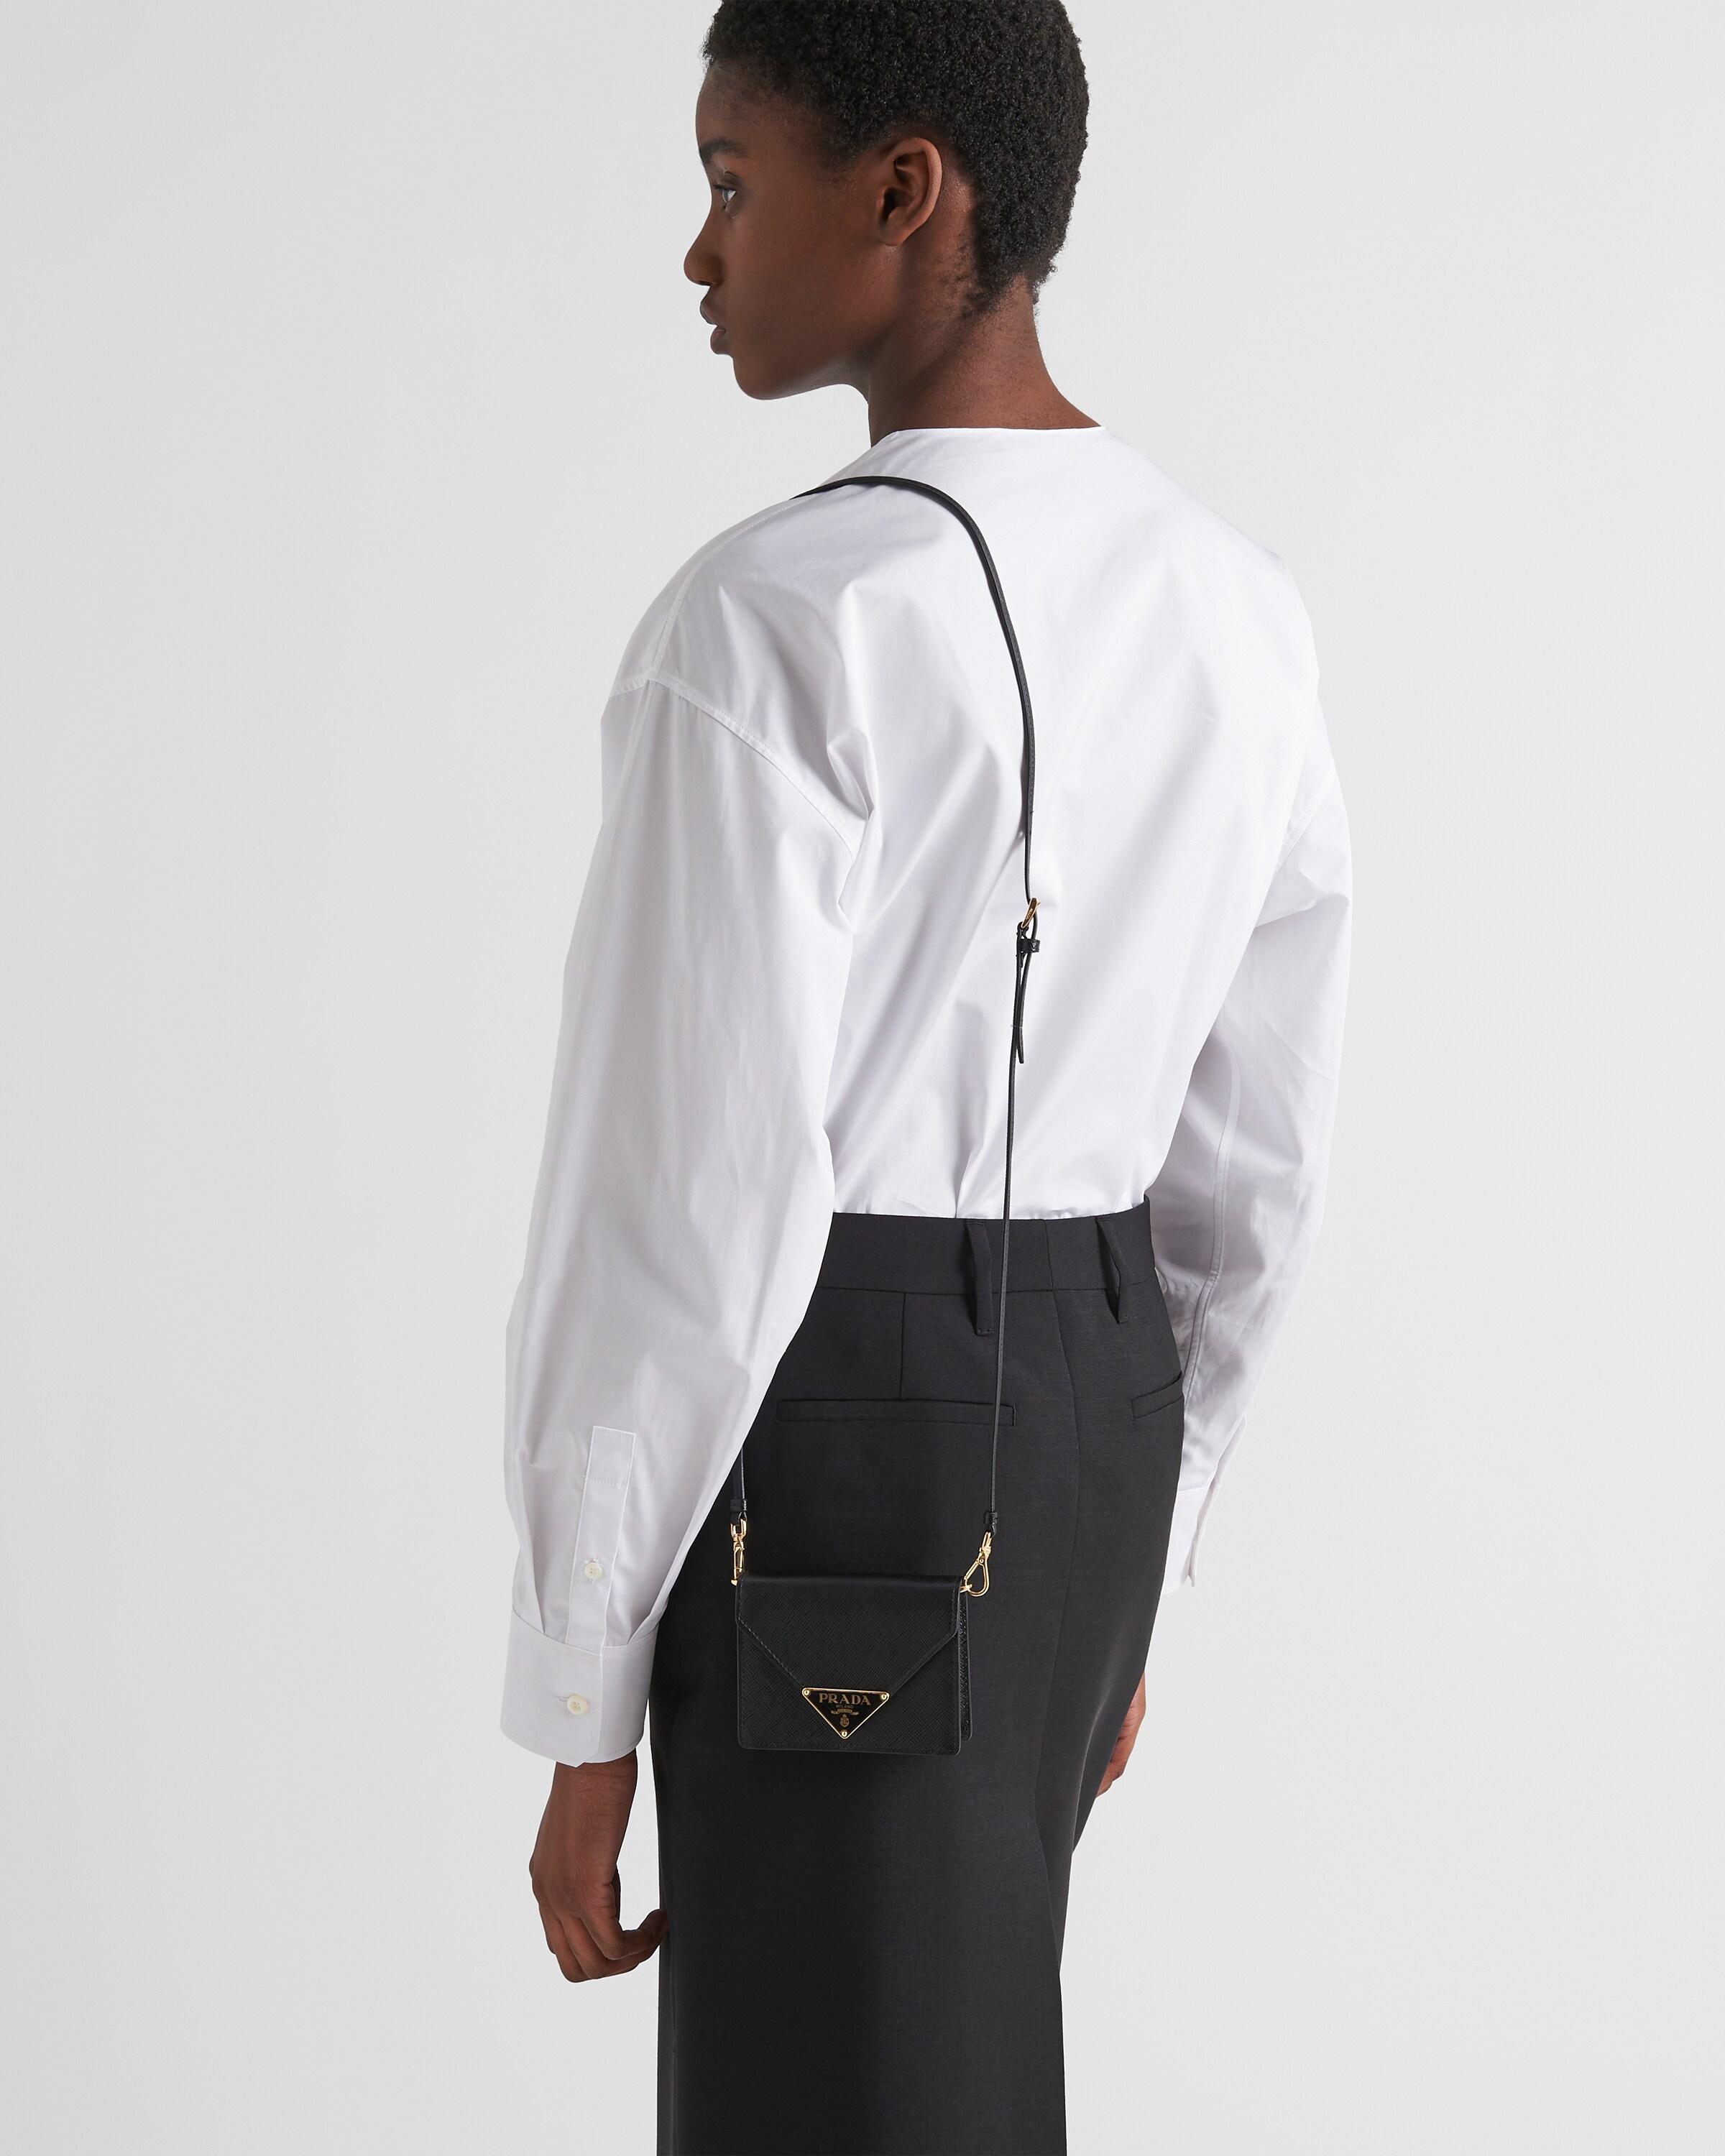 Prada Saffiano Leather Card Holder With Shoulder Strap in Black